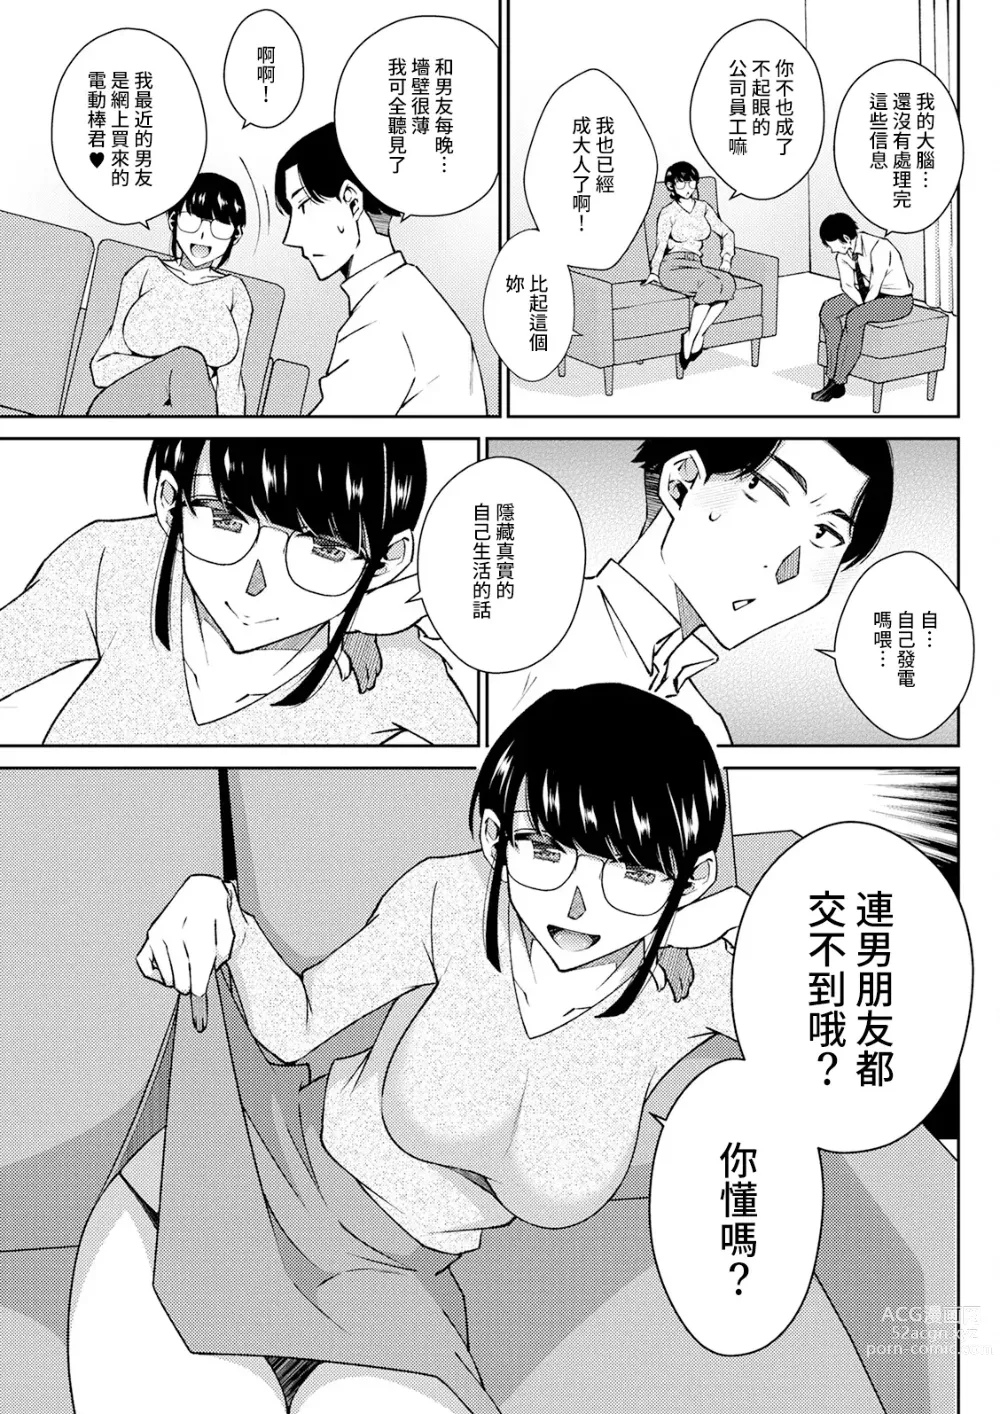 Page 7 of manga 大人になれない